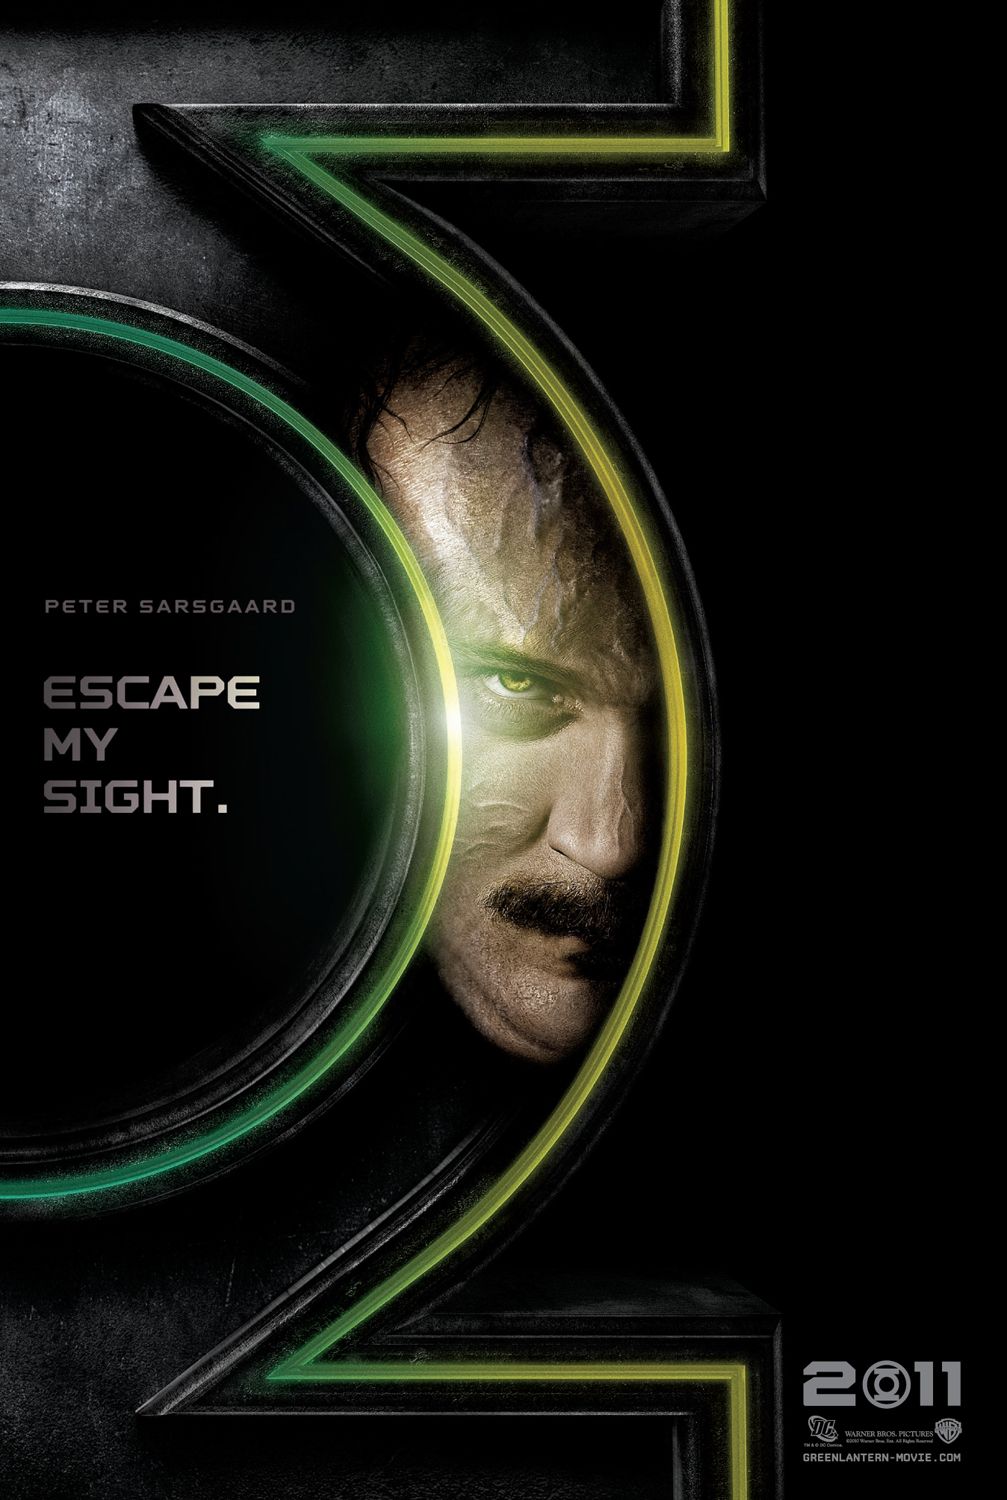 Peter Sarsgaard as Hector Hammond in Green Lantern